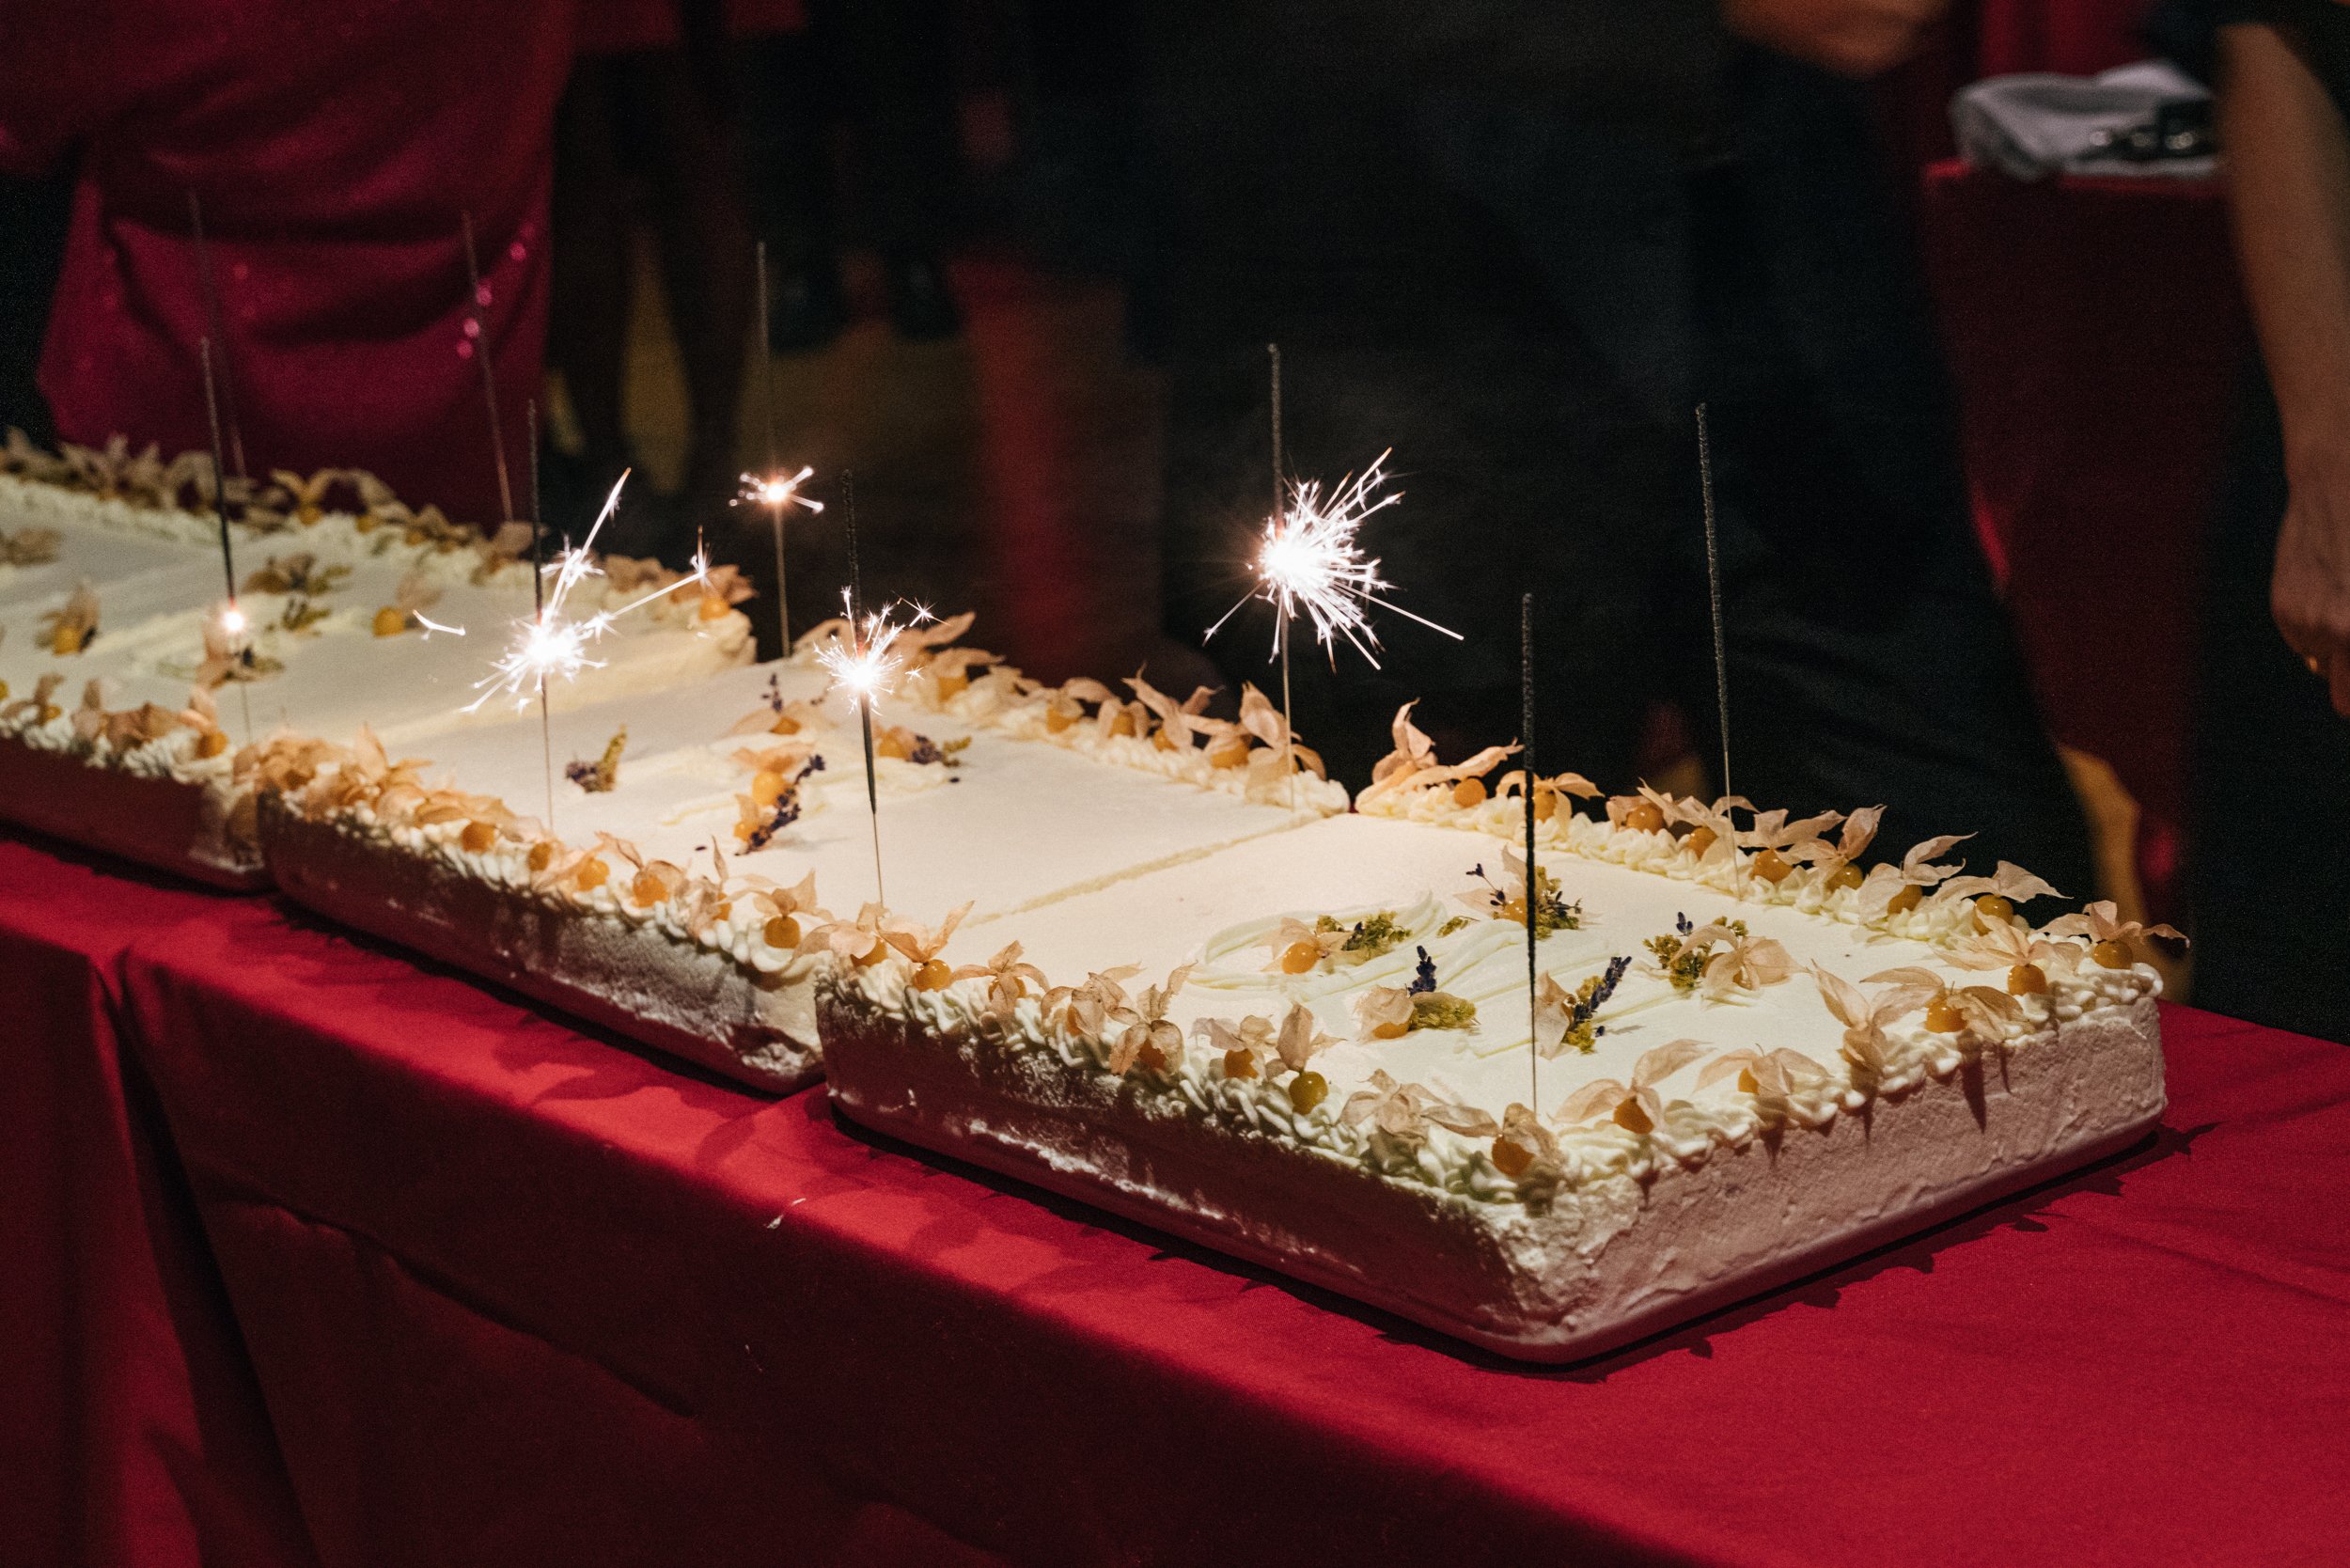 Storefront's 41st birthday cake by Elena Reygadas, chef and owner of Rosetta